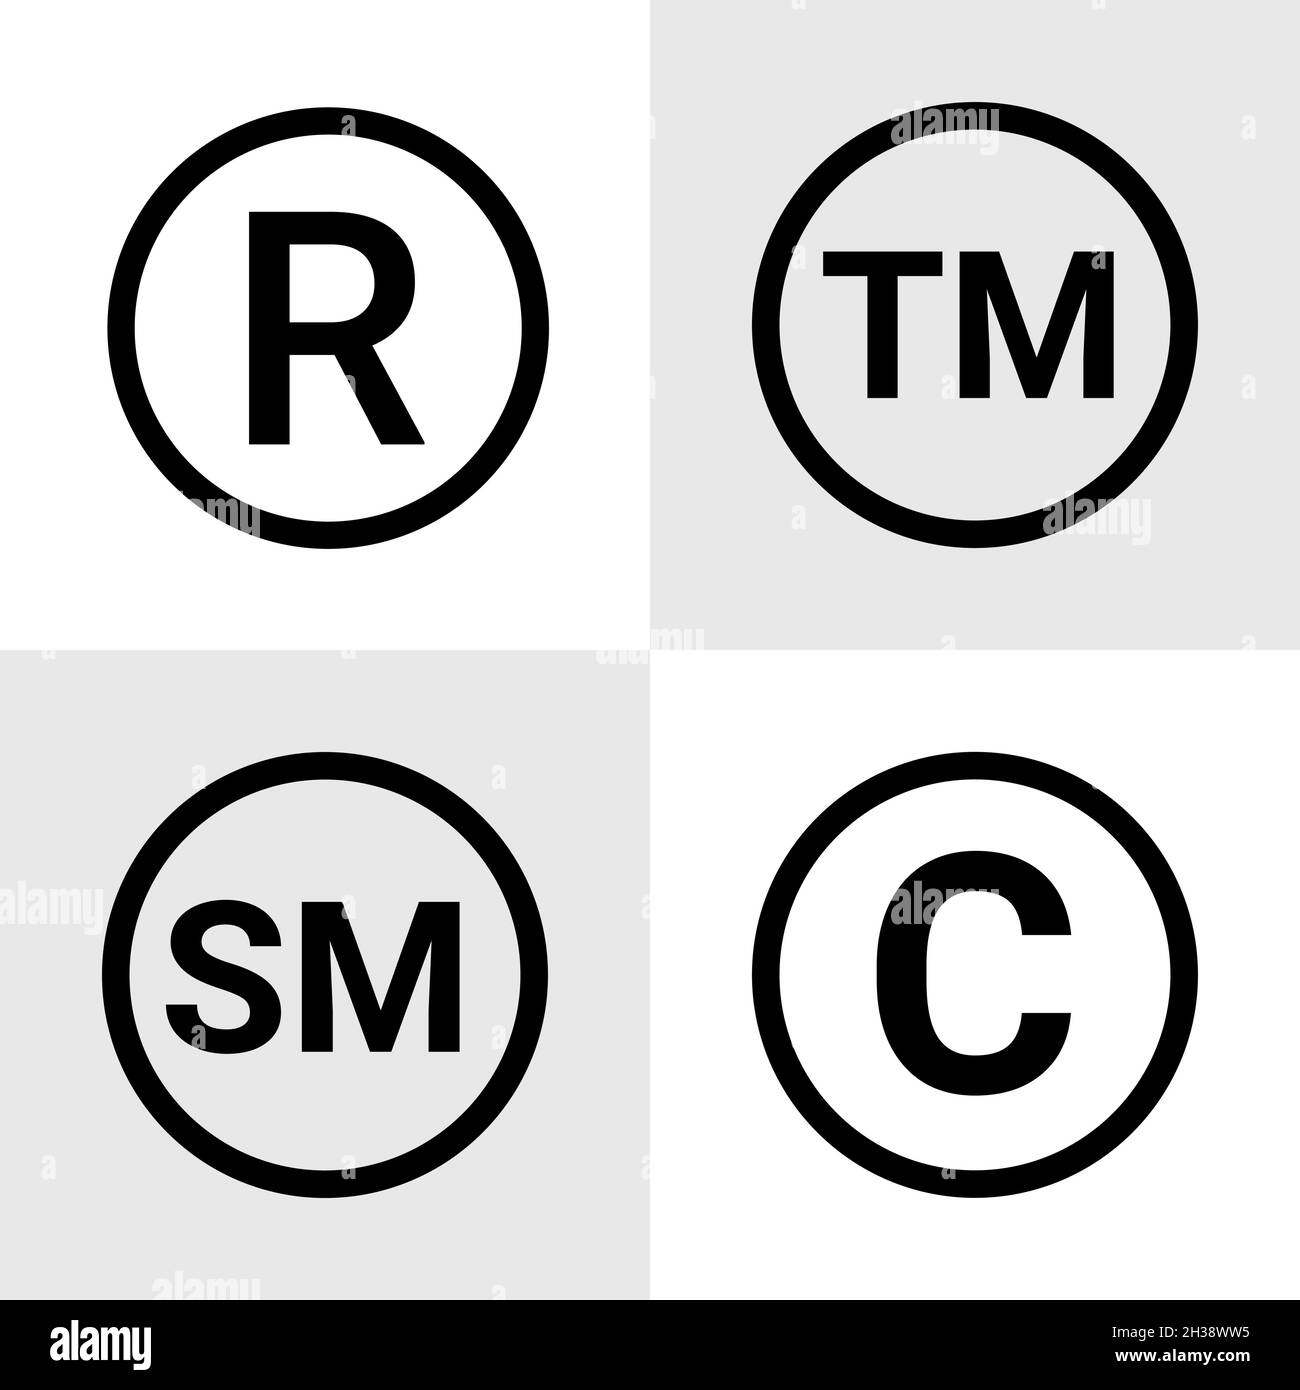 Trademark copyright symbol logo. Trade mark sign circle intellectual legal property register icon Stock Vector